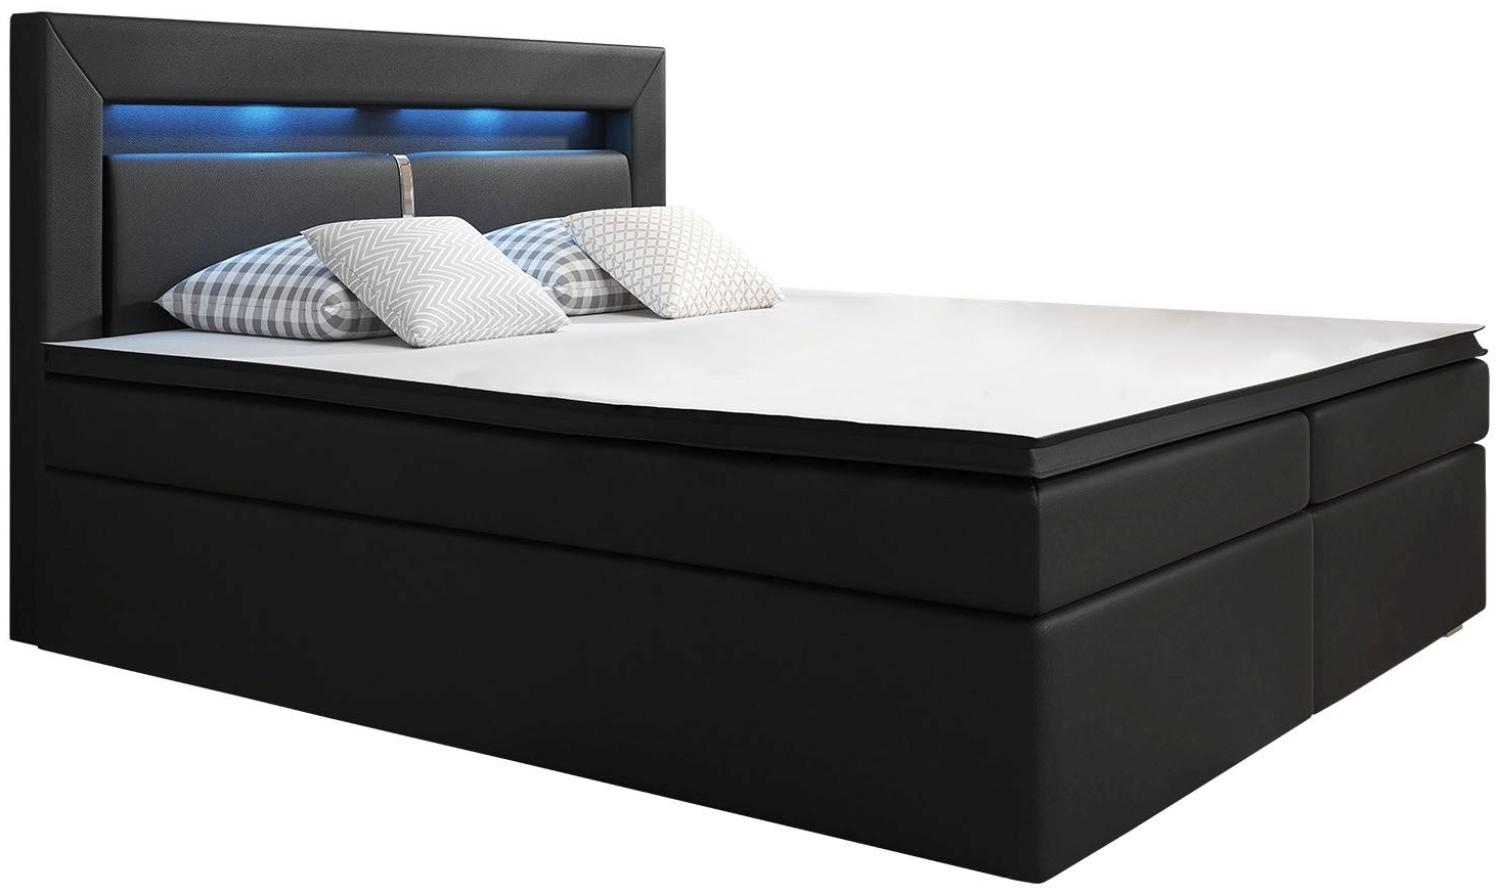 Juskys Boxspringbett New Jersey 140 x 200 cm mit Bettkästen, LED Beleuchtung, Bonell-Matratzen, Topper & Kunstleder - schwarz – Bett Doppelbett Bild 1